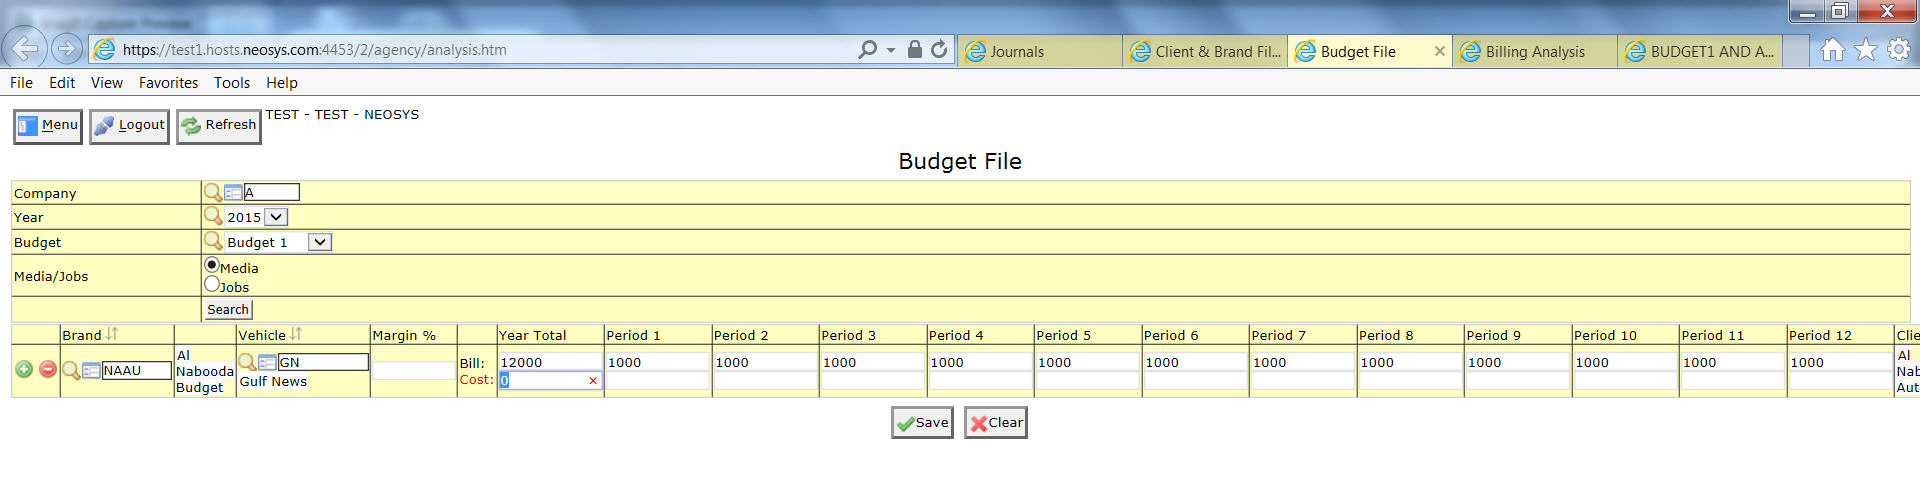 Budget file per client.jpg